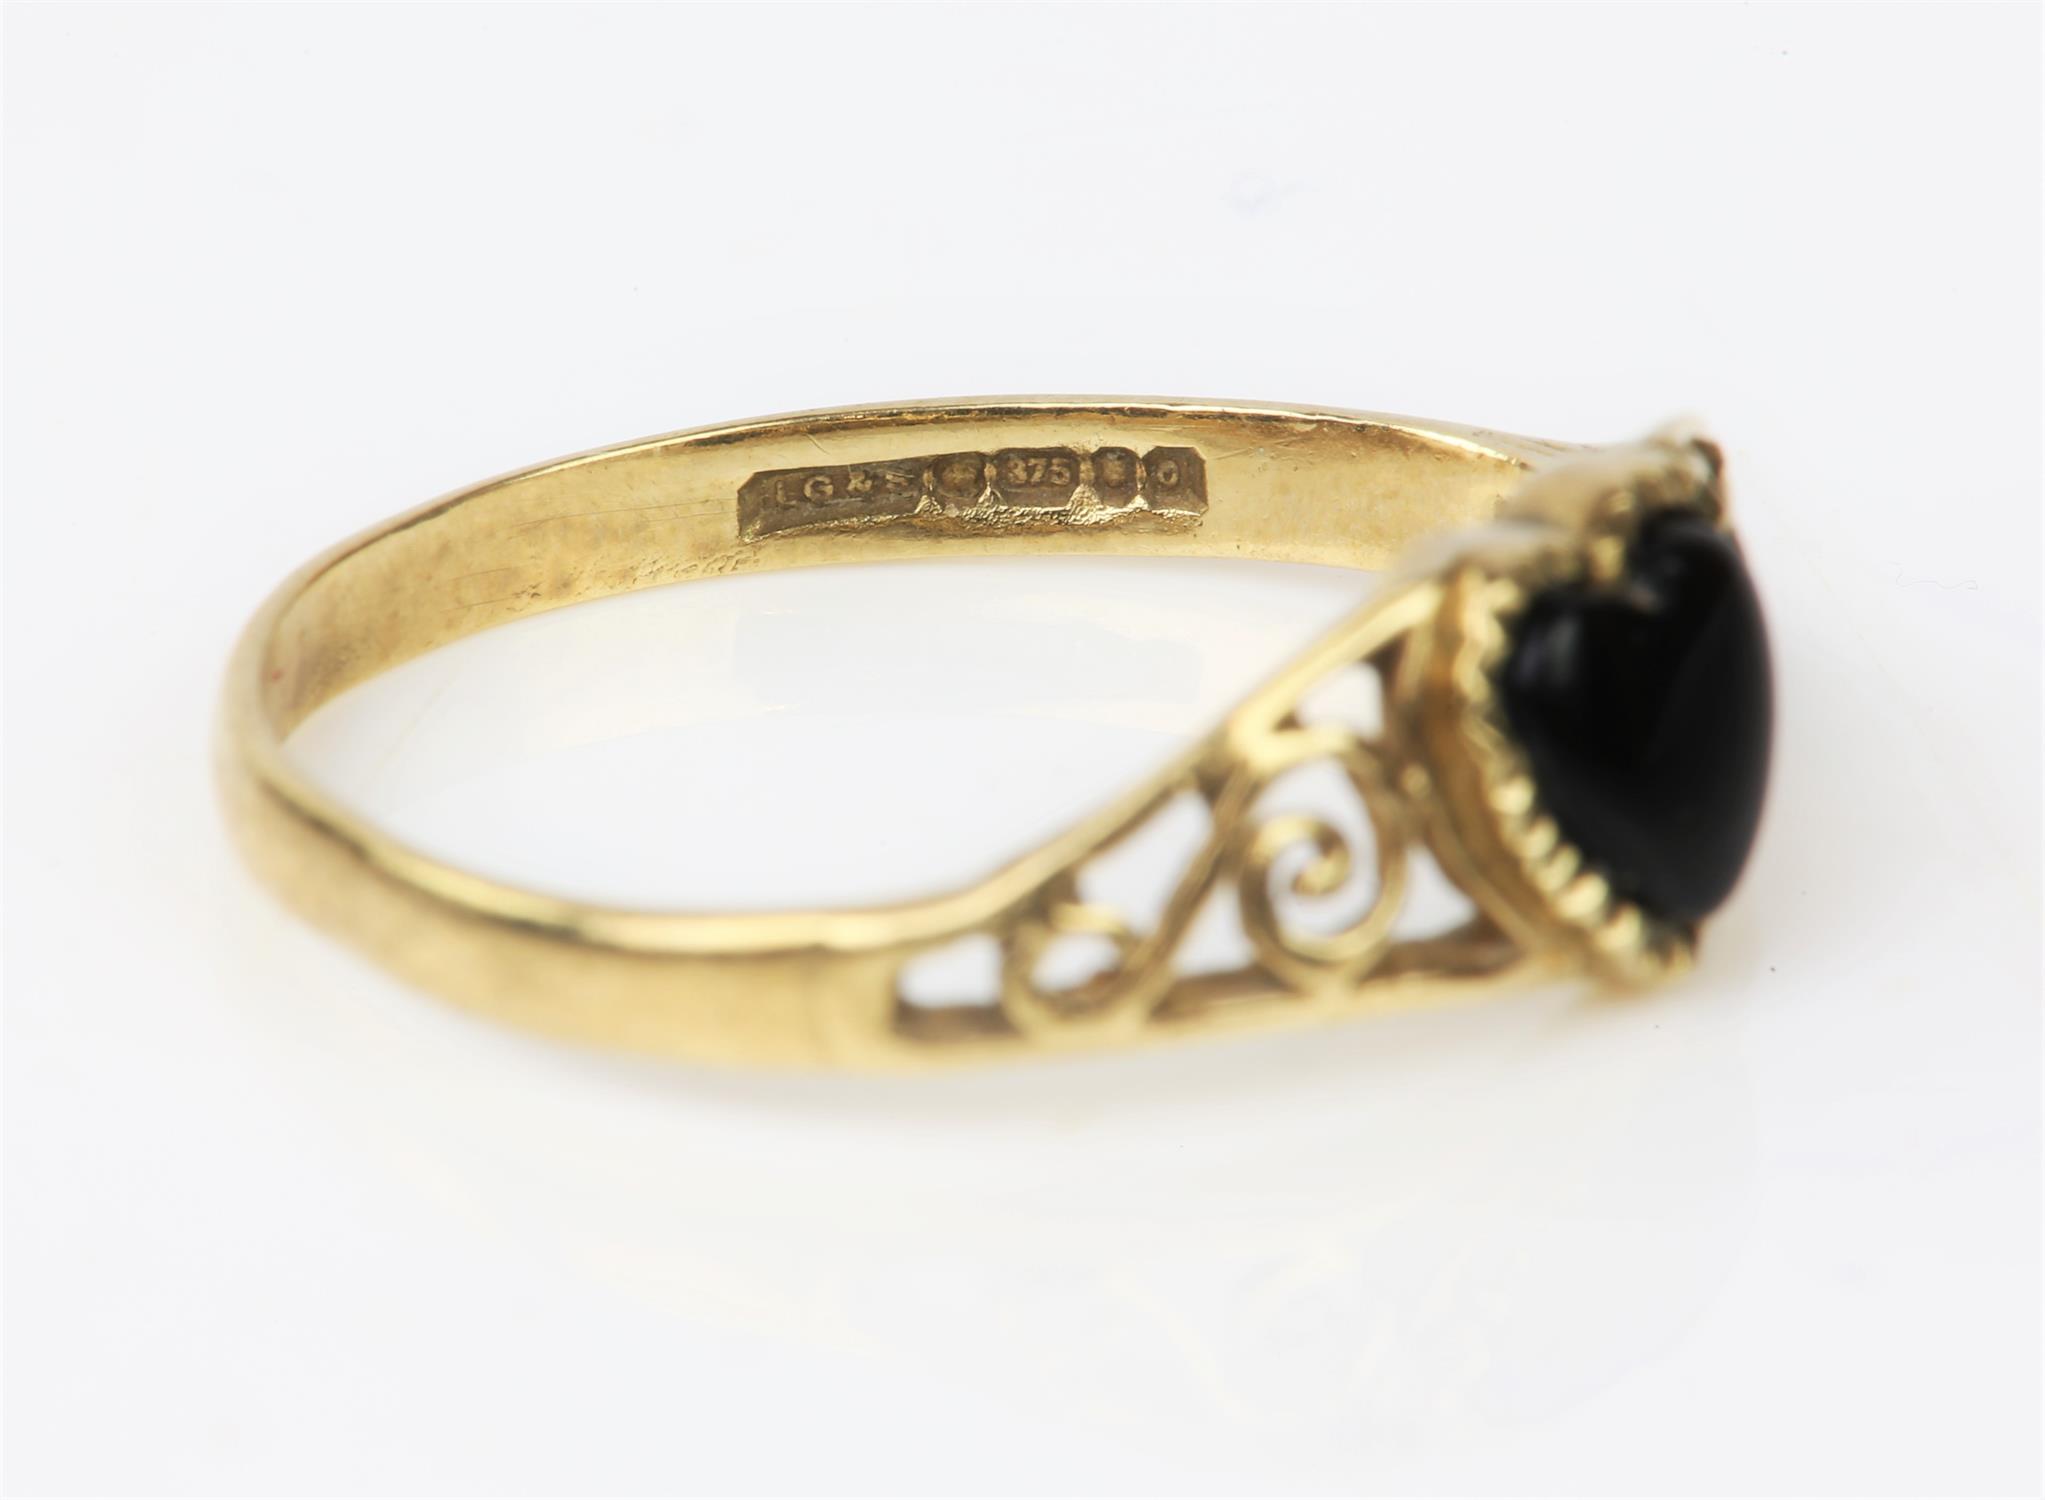 9 carat gold heart stone set ring 1.21 grams - Image 2 of 4